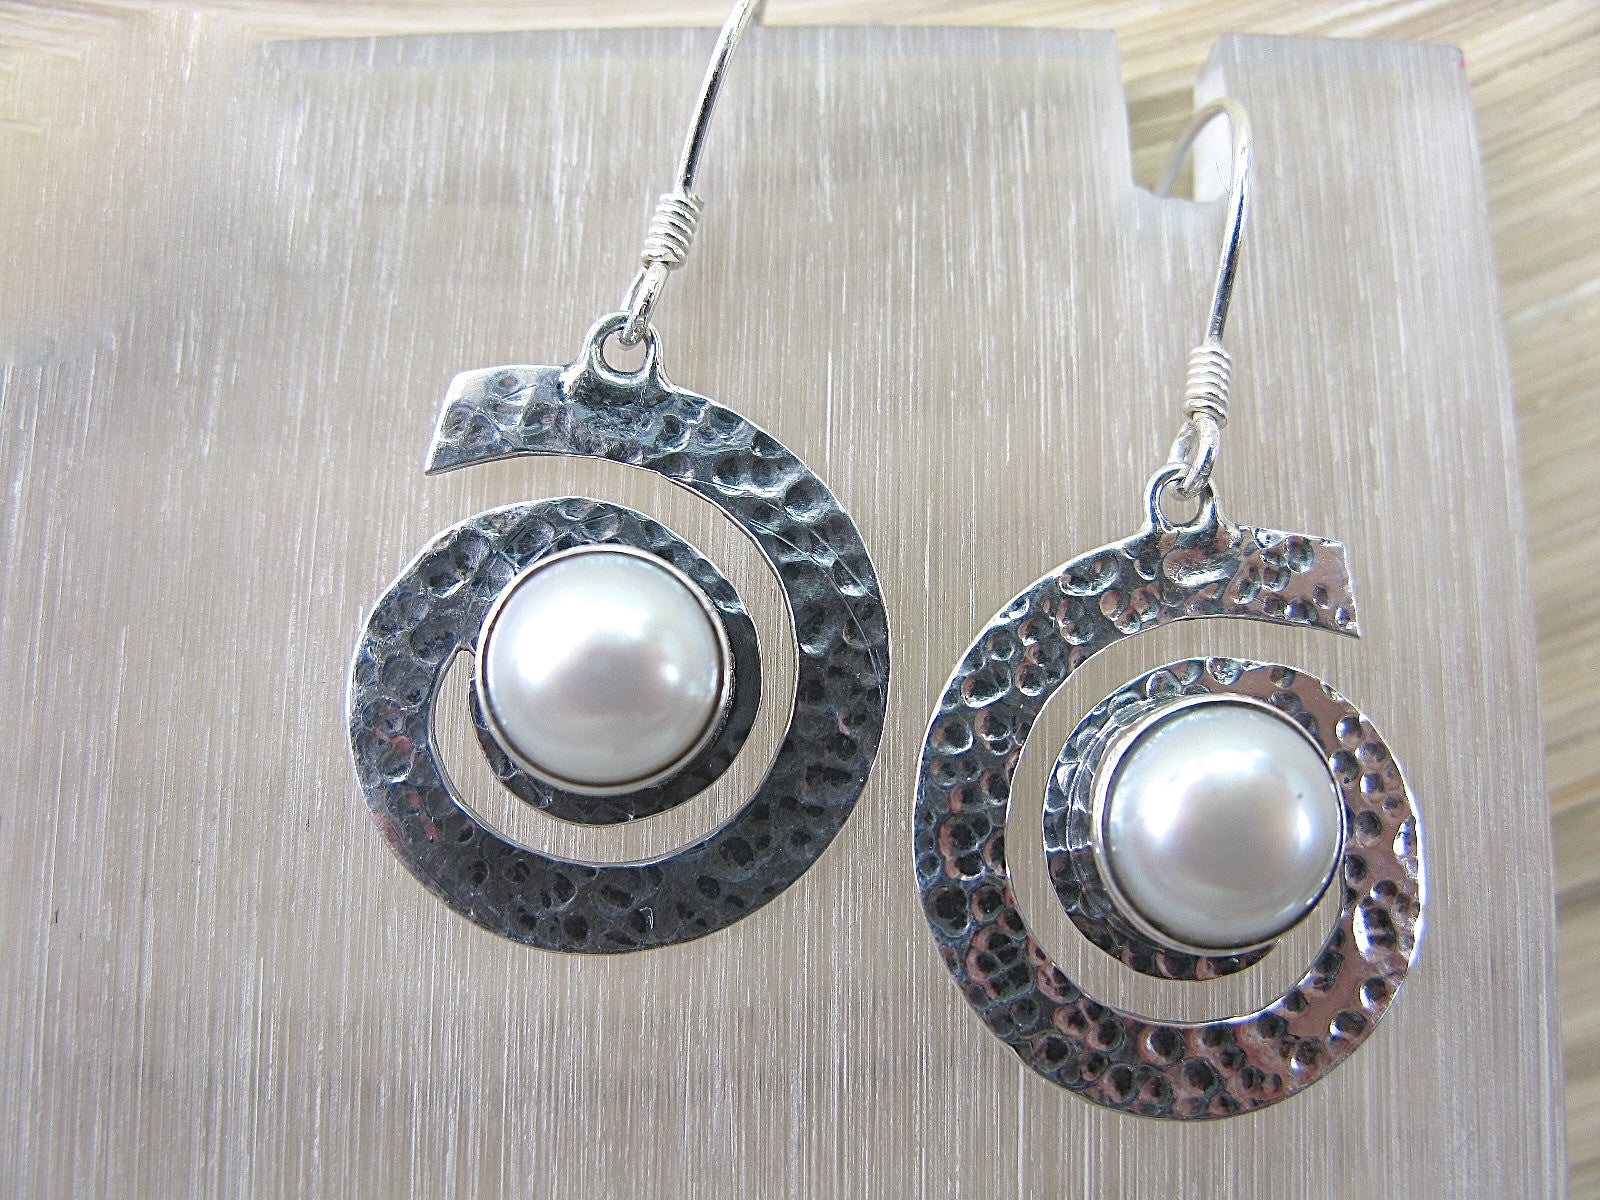 Hammered Swirl Mother of Pearl 925 Sterling Silver Earrings Earrings Faith Owl - Faith Owl